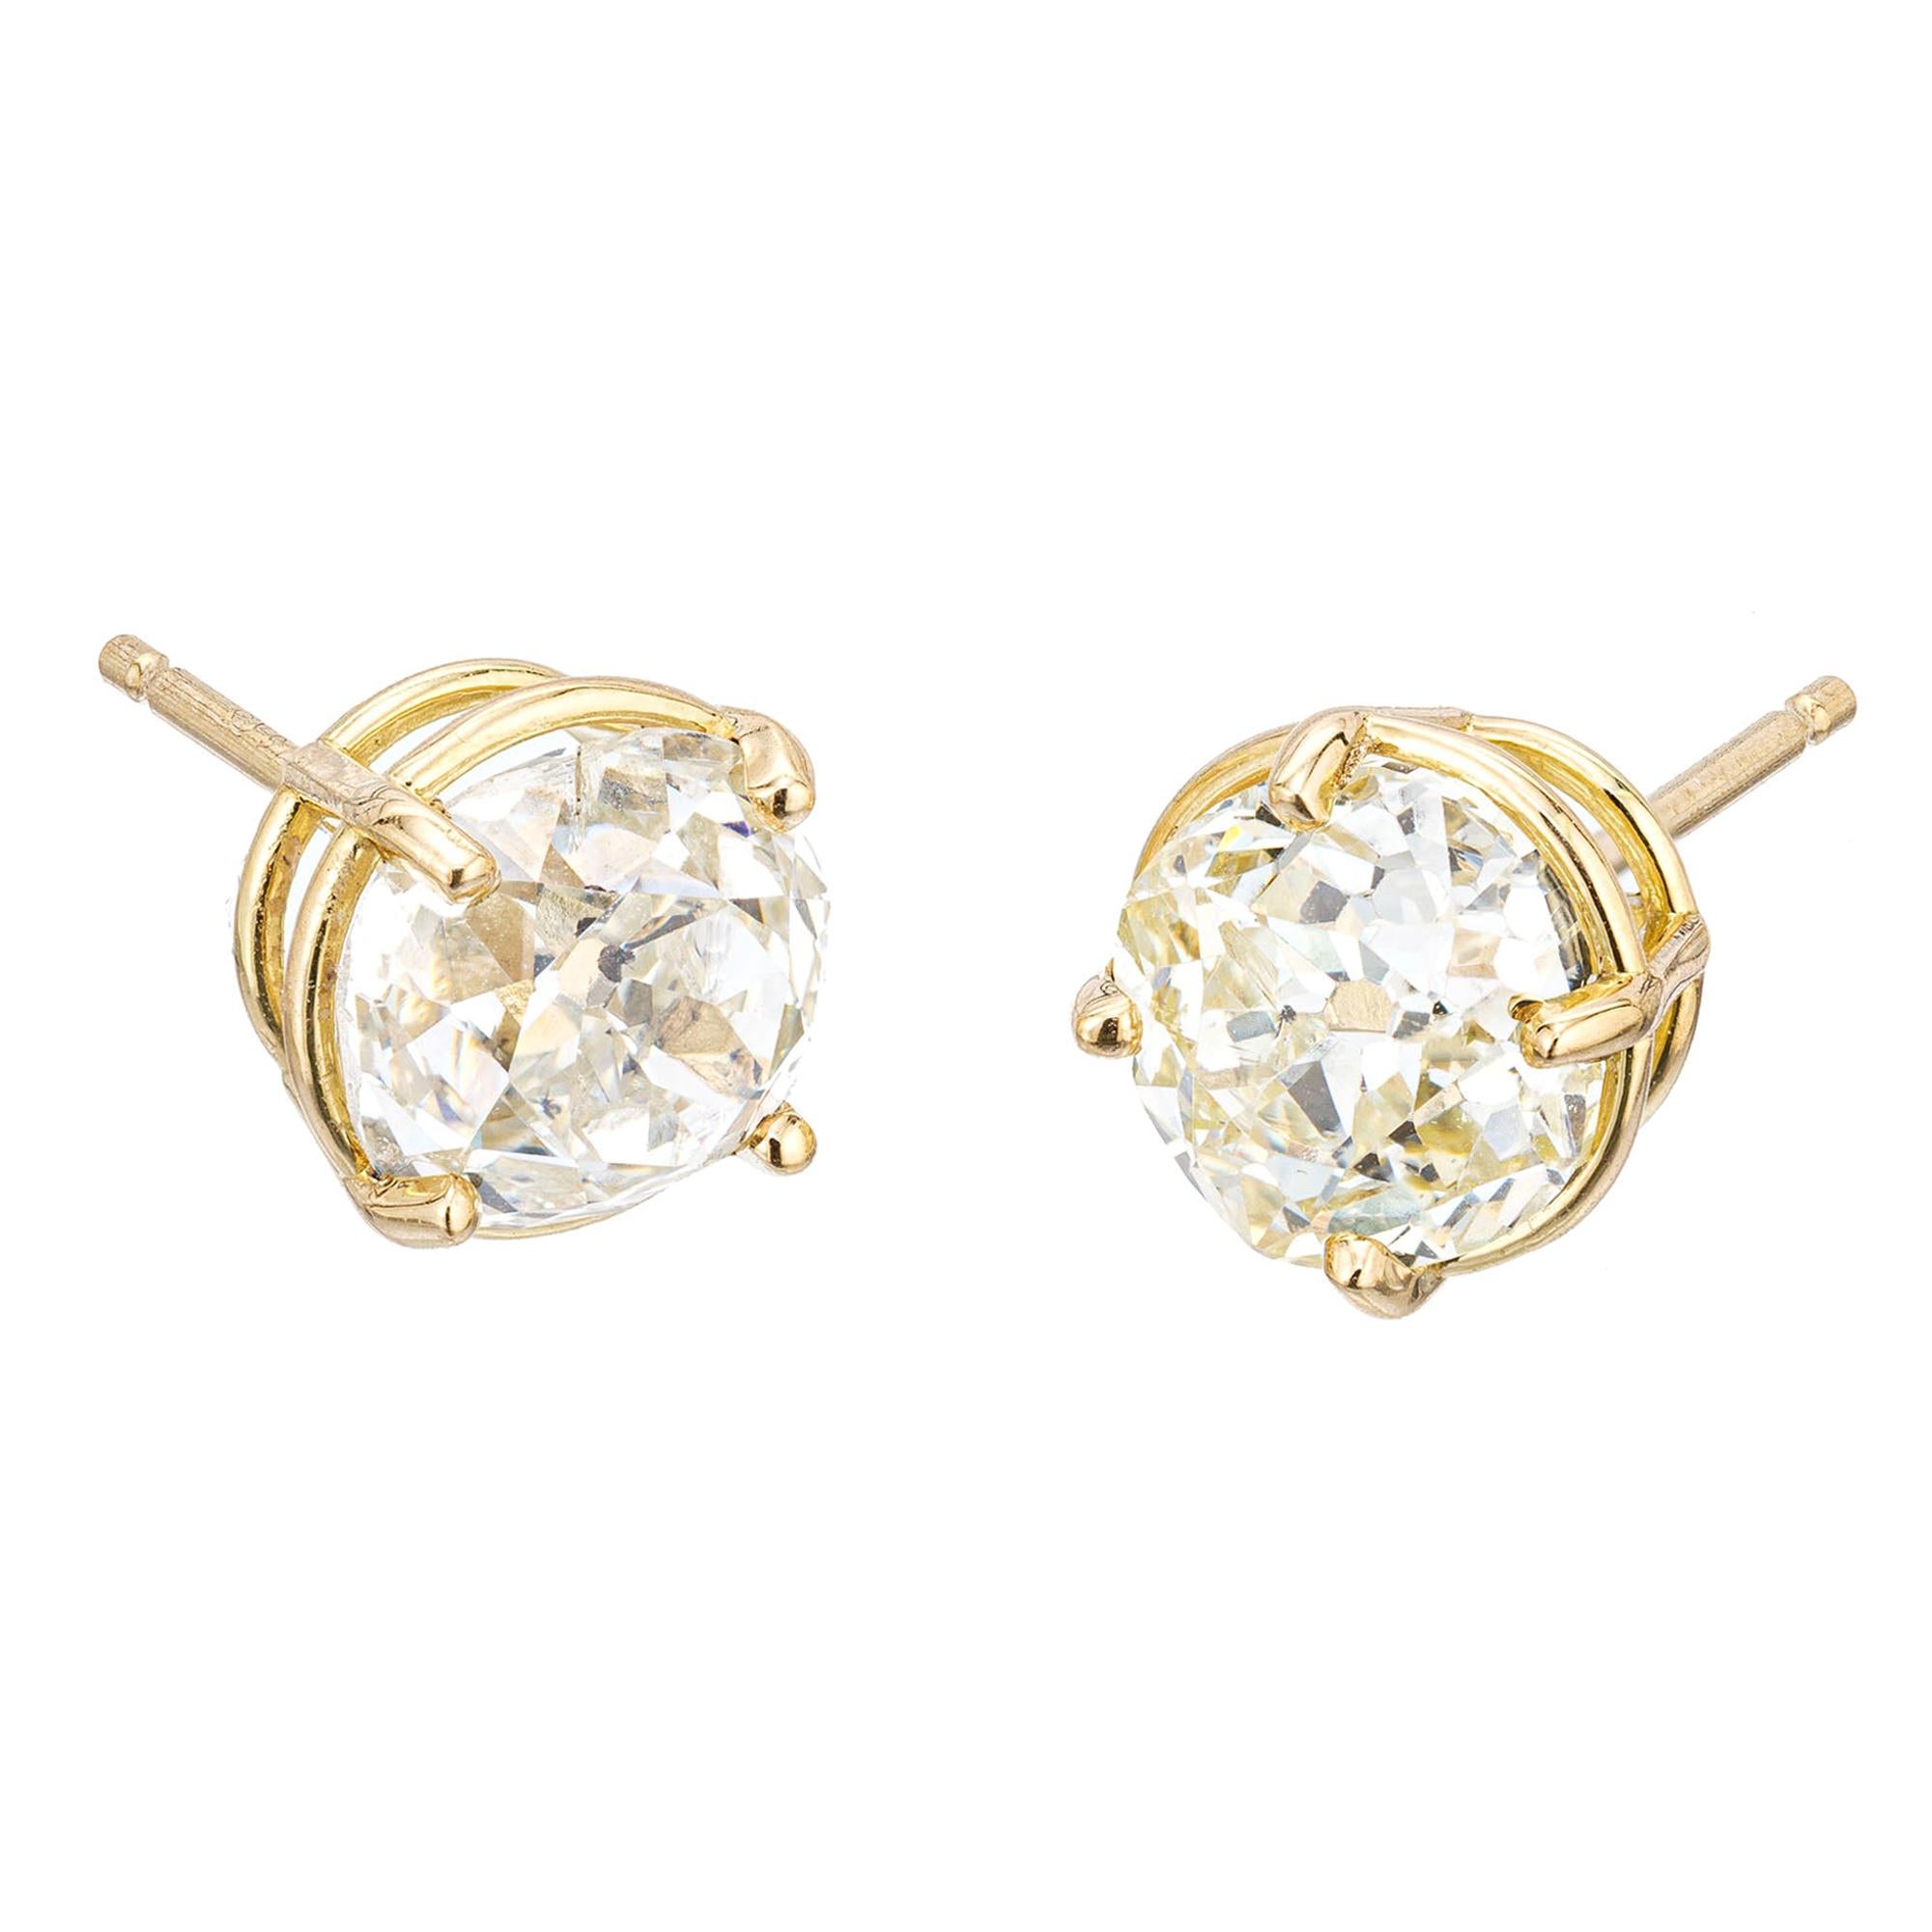 Peter Suchy GIA Certified 3.25 Carat Diamond Yellow Gold Stud Earrings